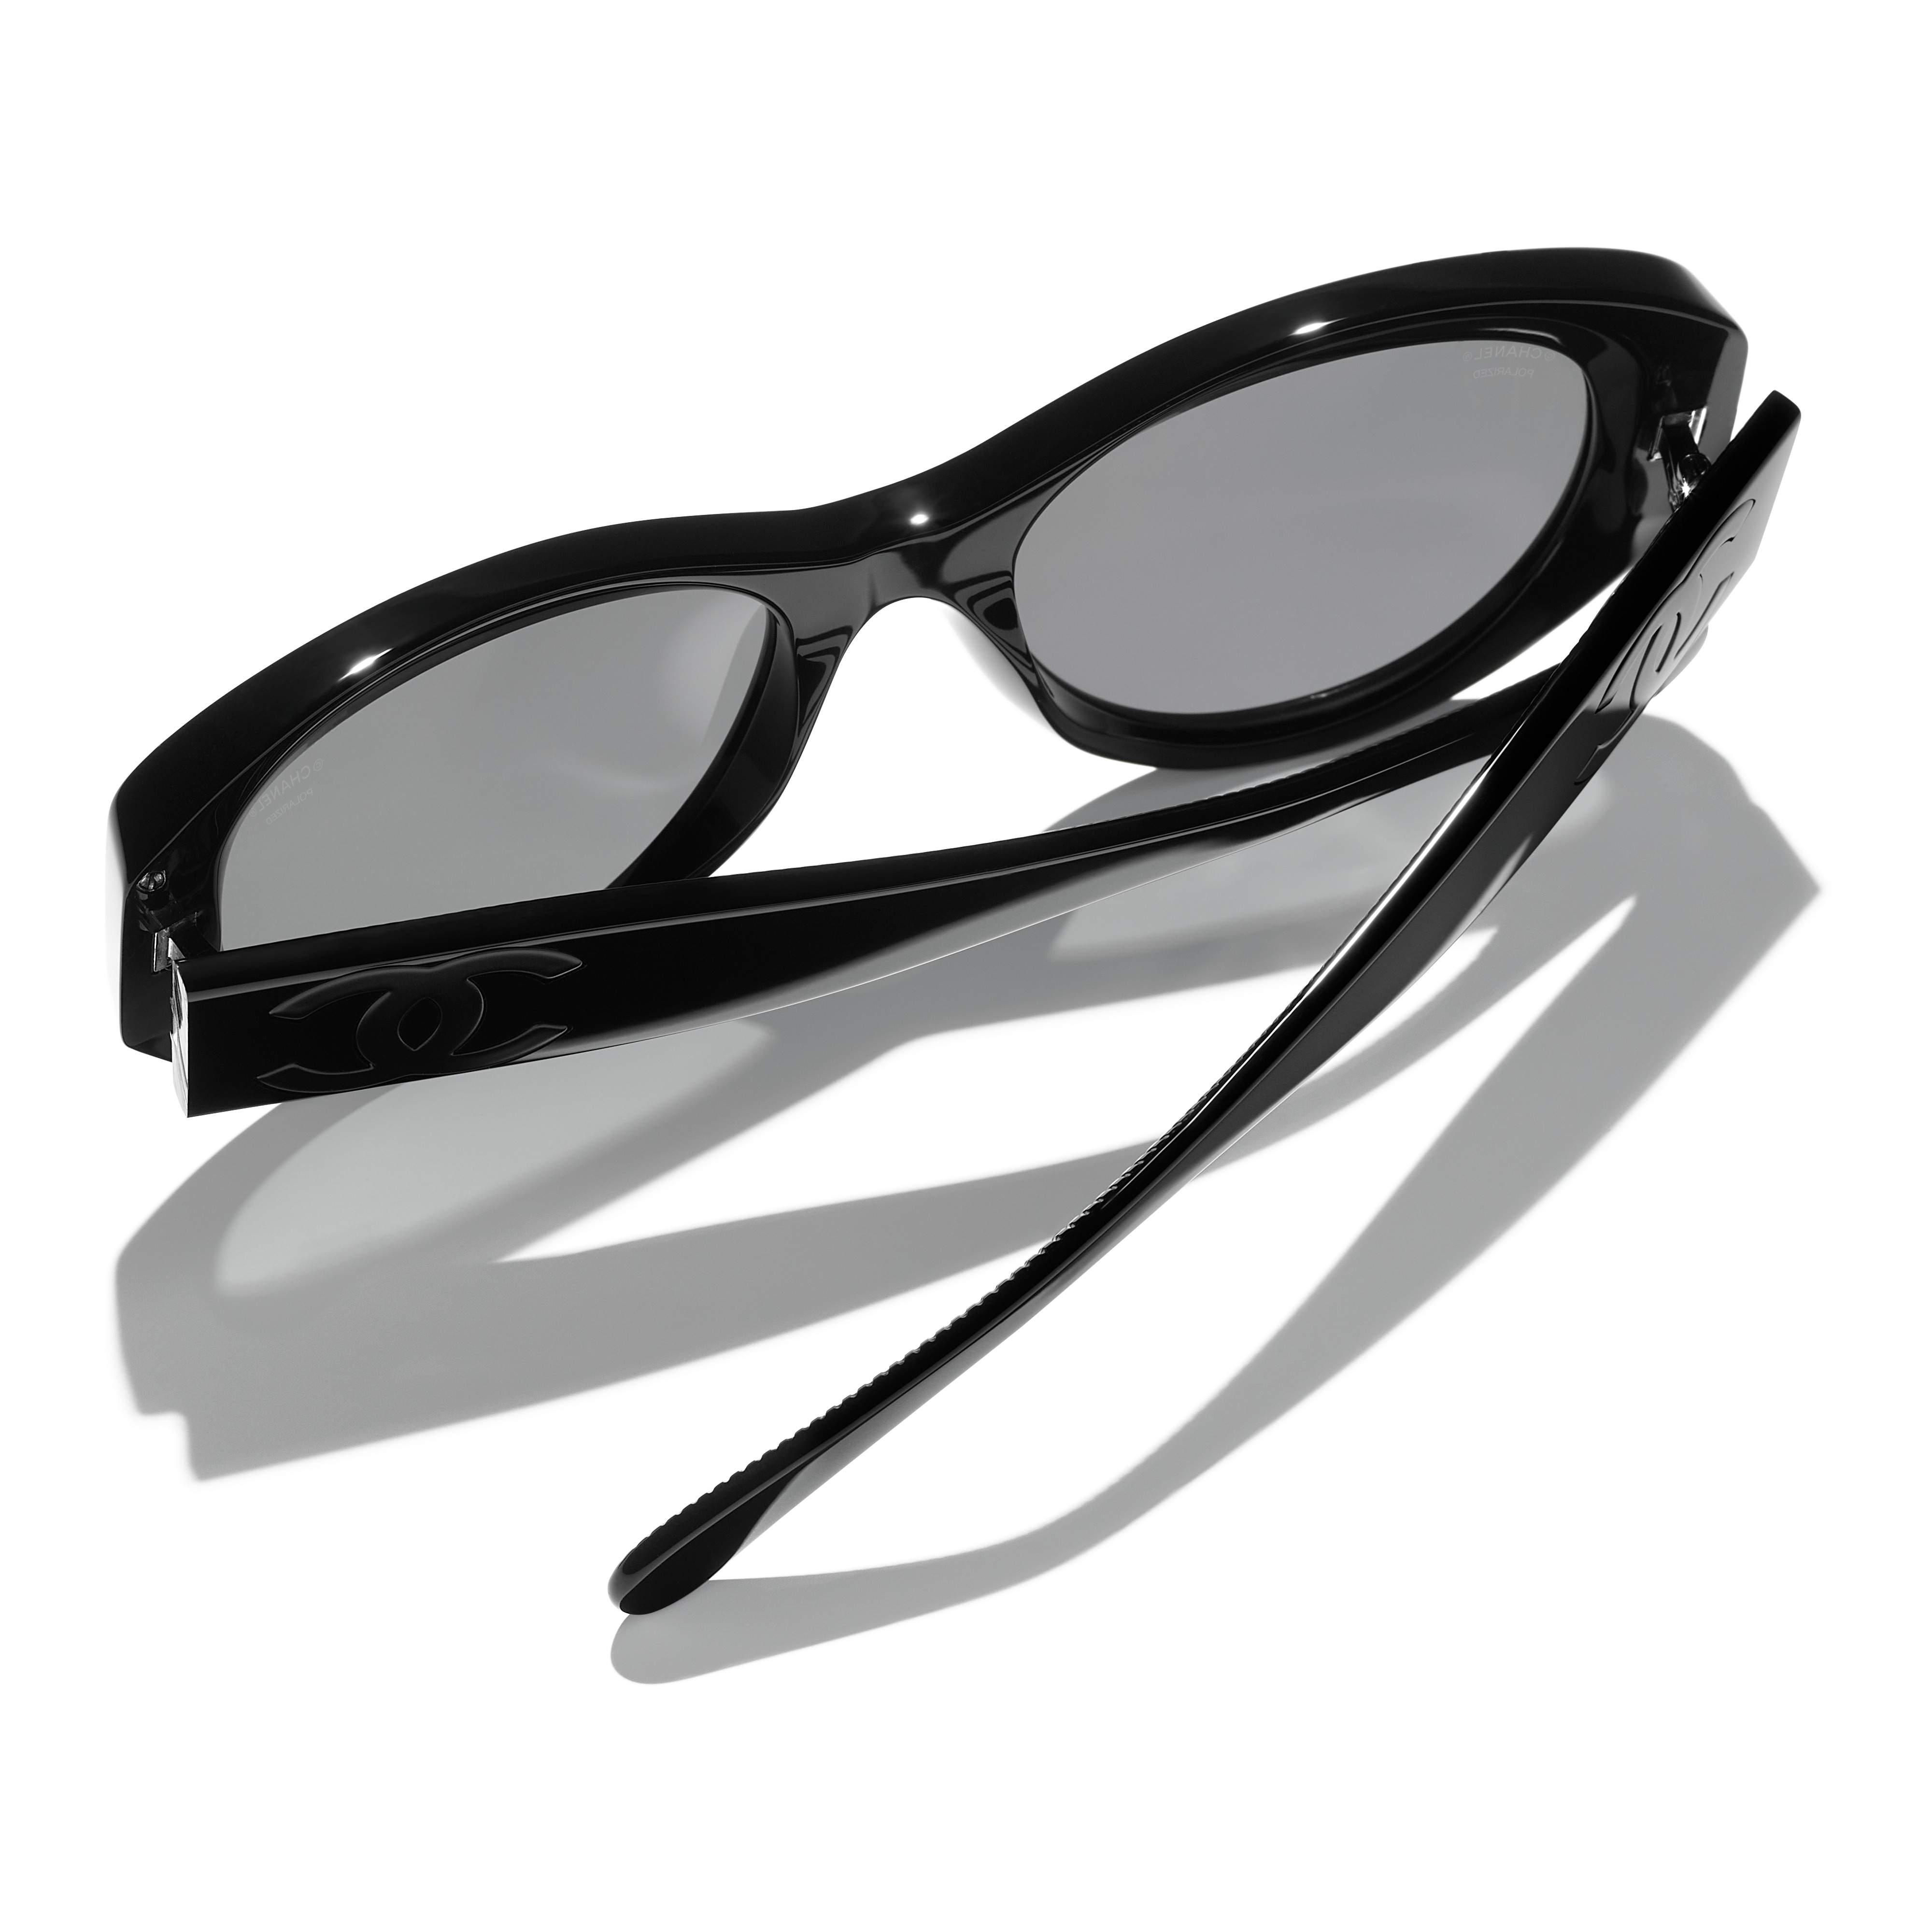 CHANEL CH 5422 B C501T8 Black Dark Grey Polarized Lens Sunglasses New  Authentic $499.95 - PicClick